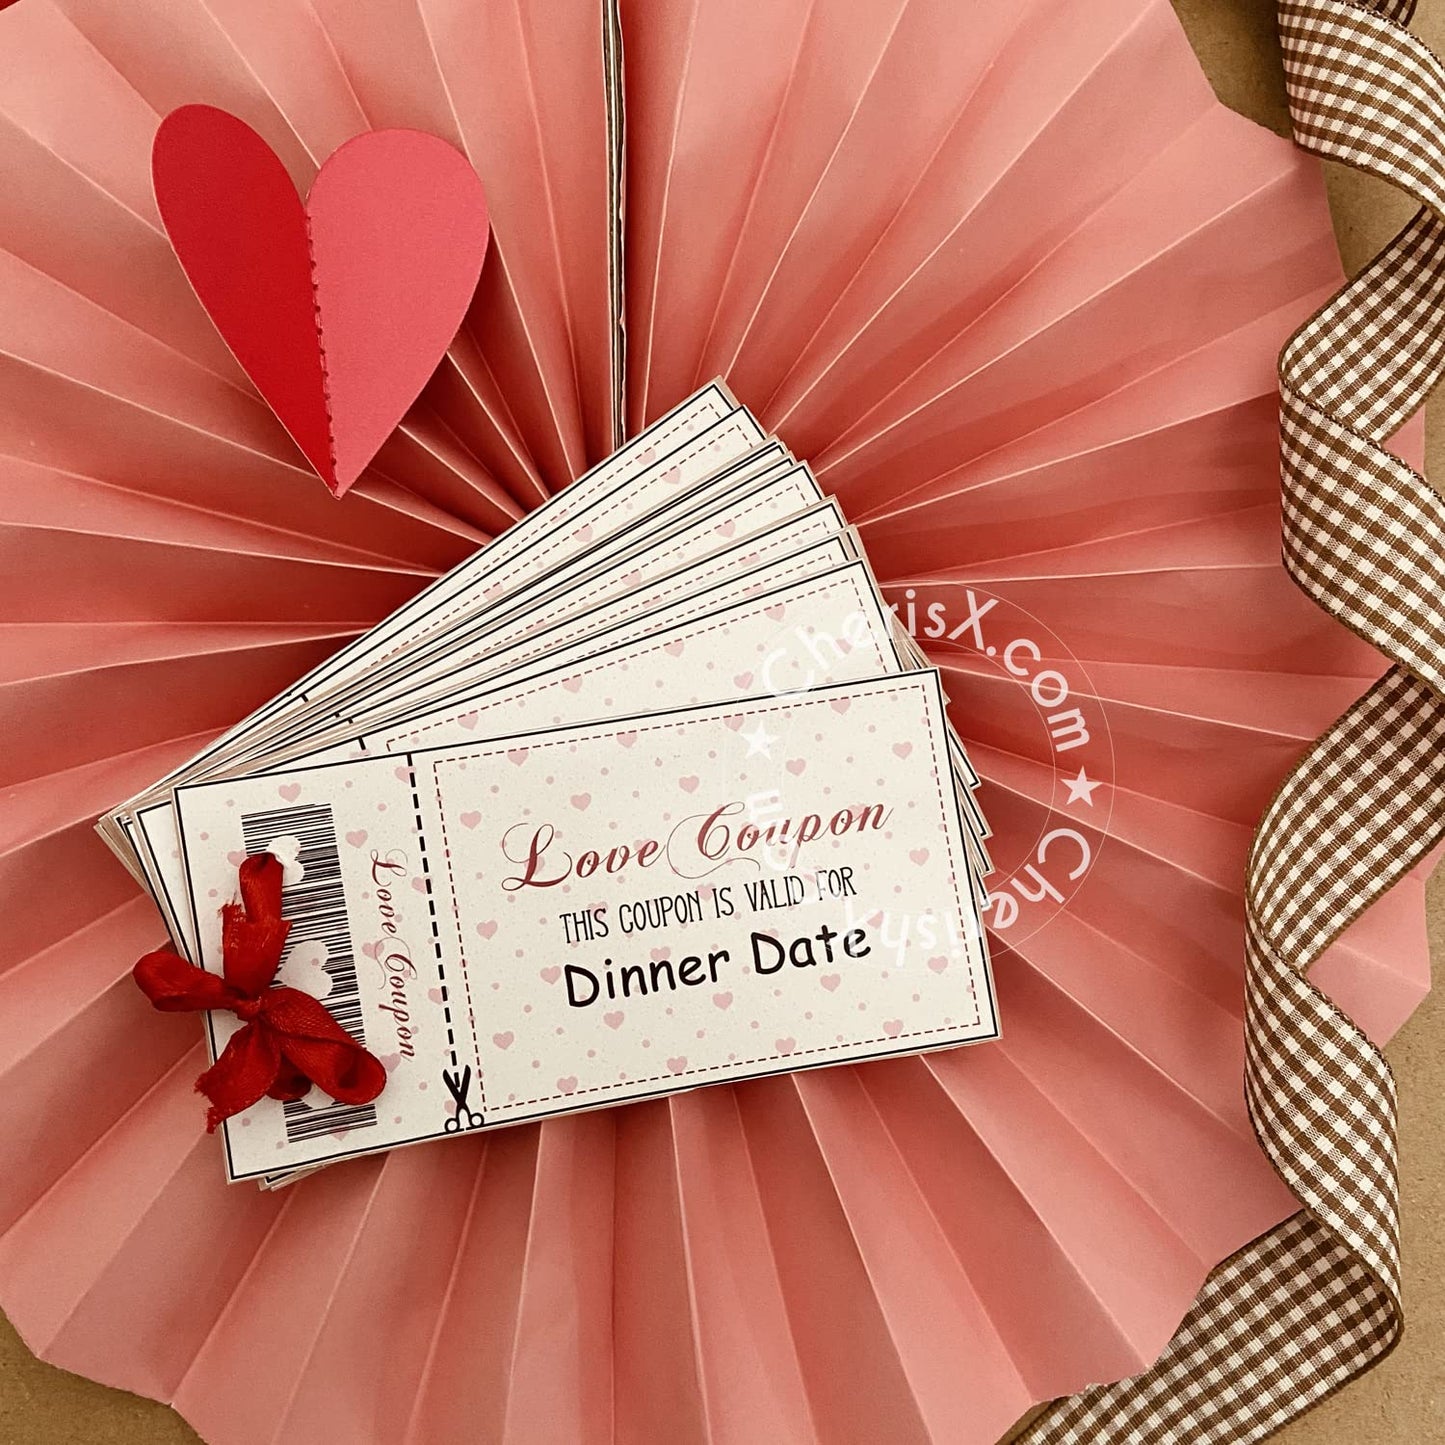 Love Coupon - Valentine Gift/Valentine Day Gift for Girlfriend/boy Friend/Valentines Day Gift freeshipping - CherishX Partystore